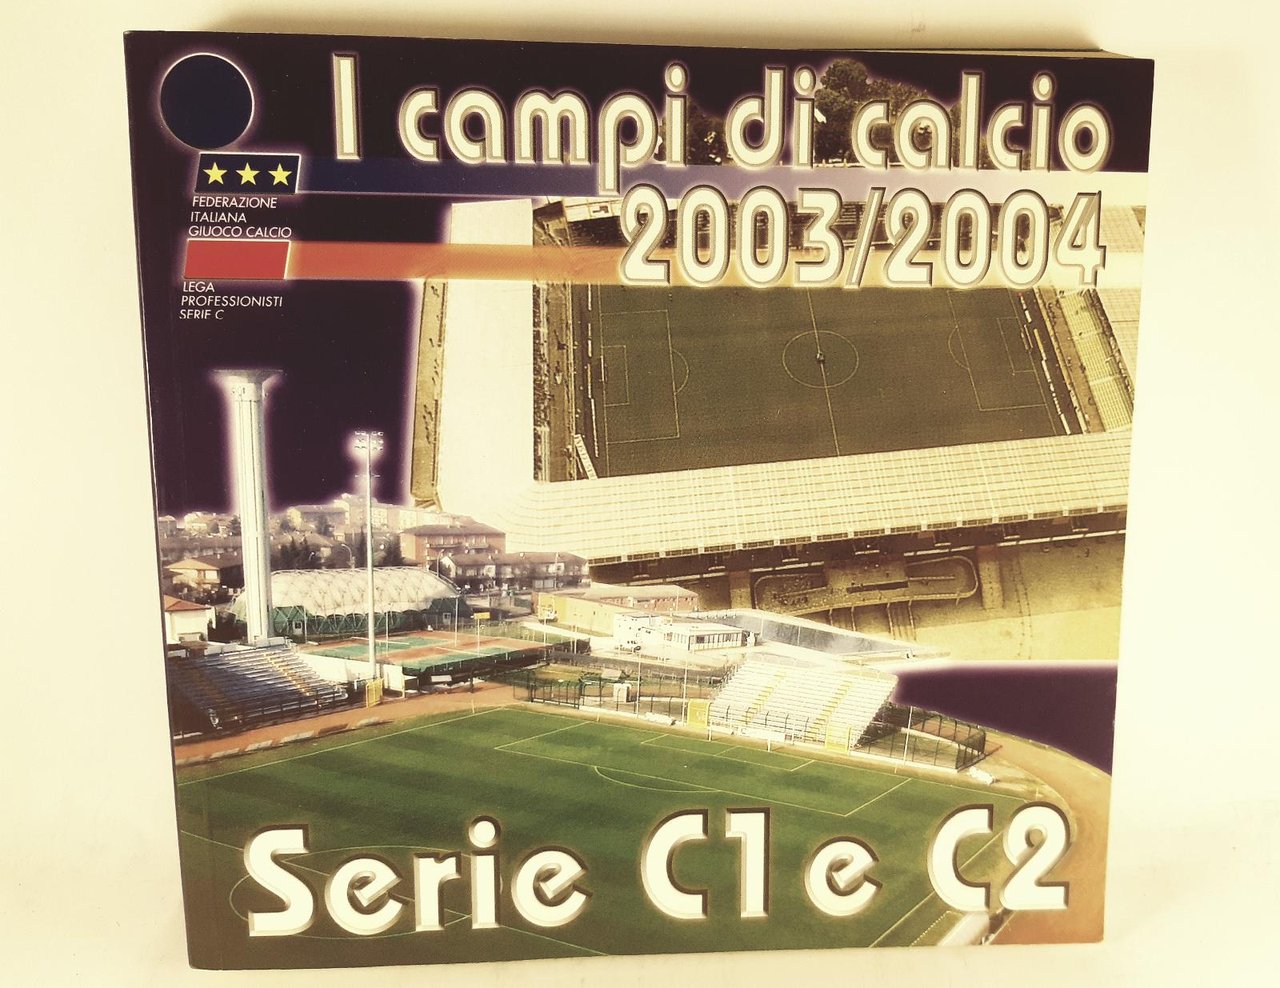 I campi di calcio 2003-2004 Serie C1 C2 Fede. Italiana …